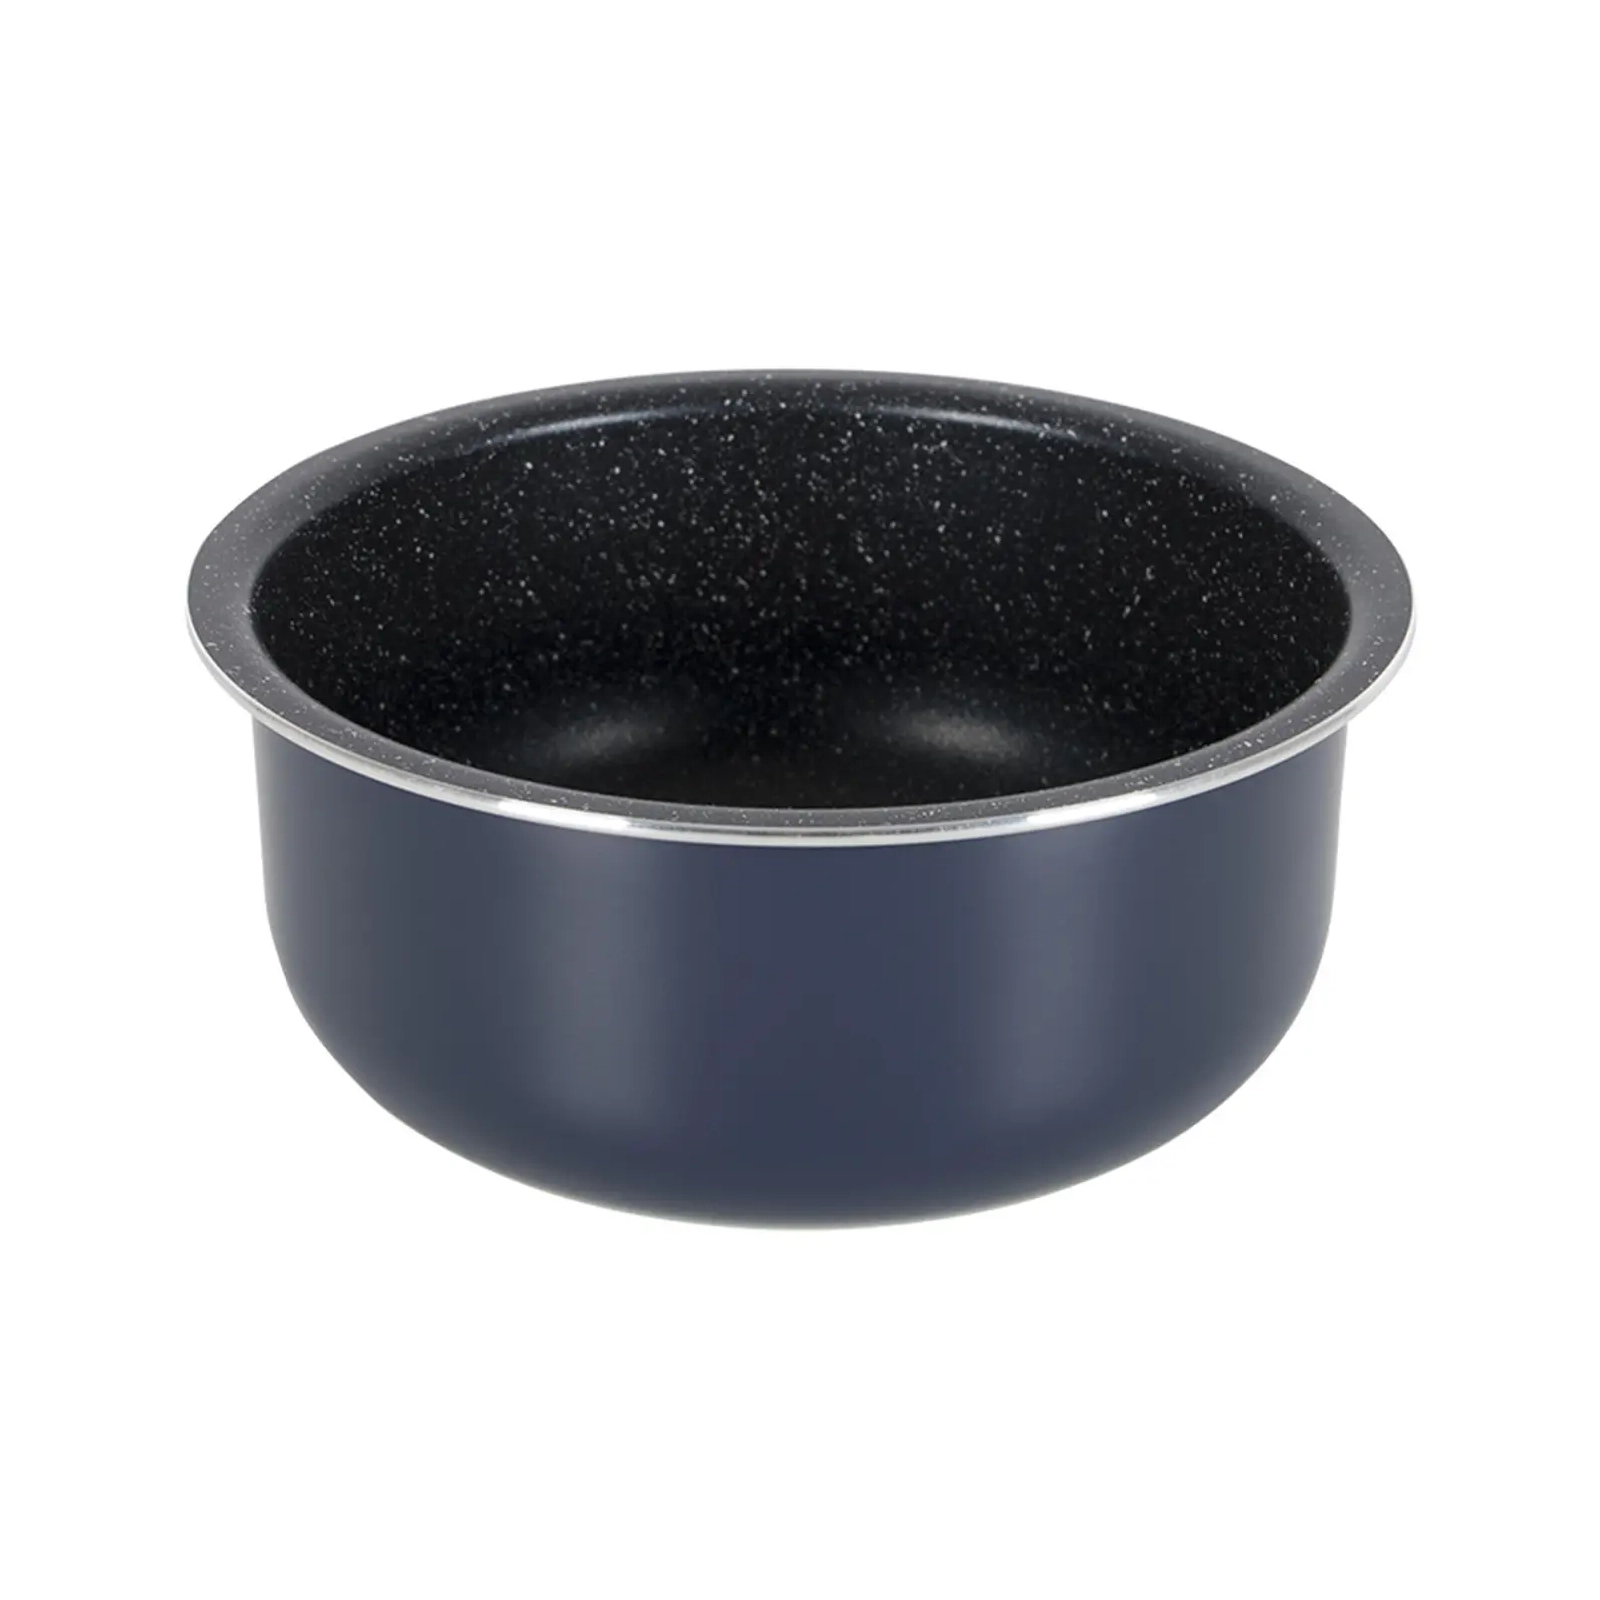 Набір посуду Gimex Cookware Set induction 9 предметів Dark Blue (6977225) зображення 6